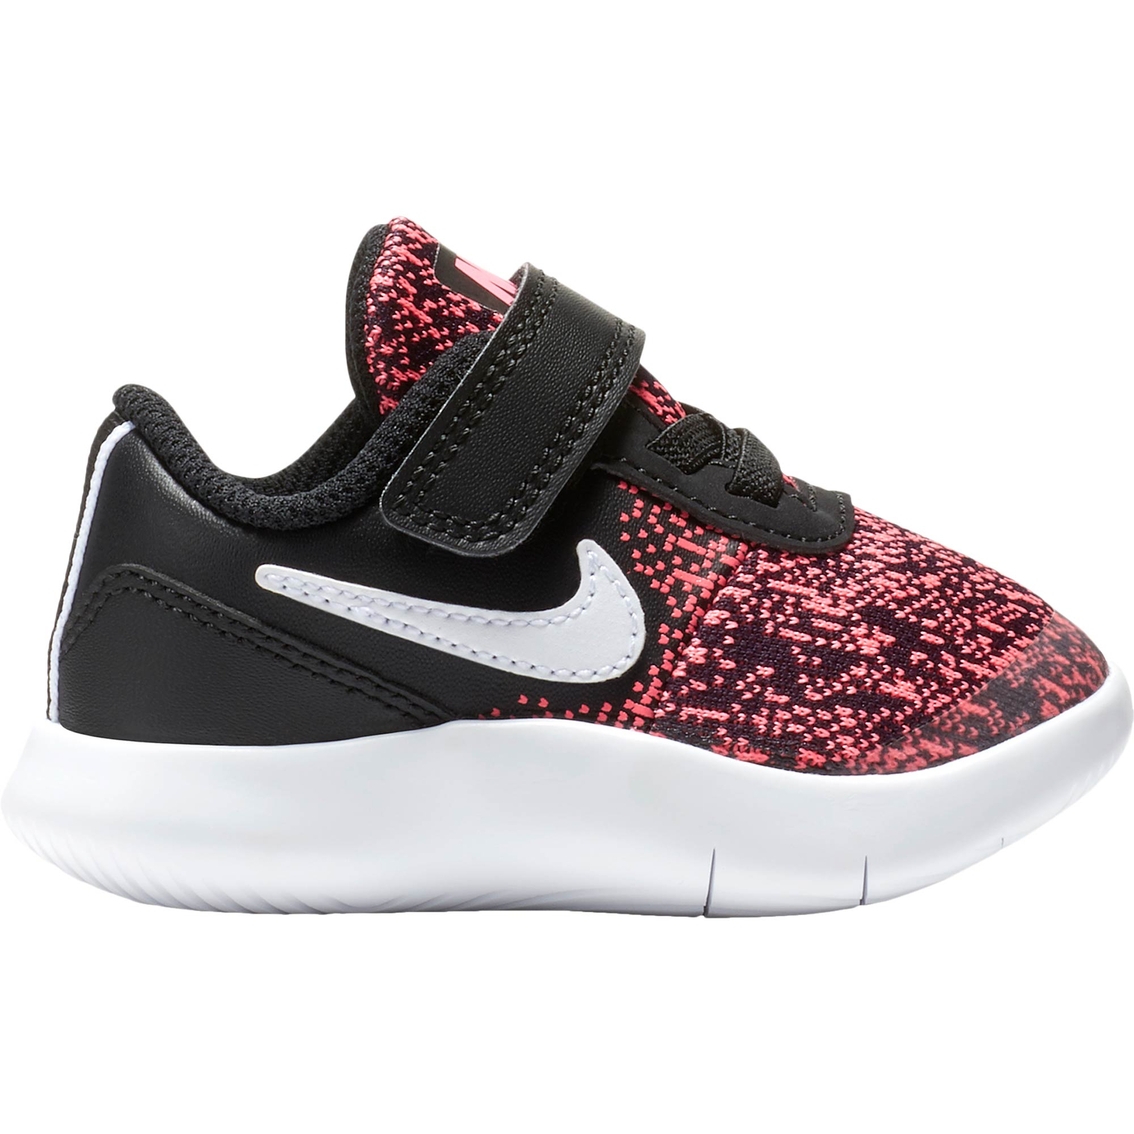 Nike Toddler Girls Flex Contact Running Shoes | Sneakers | Shoes | Shop ...